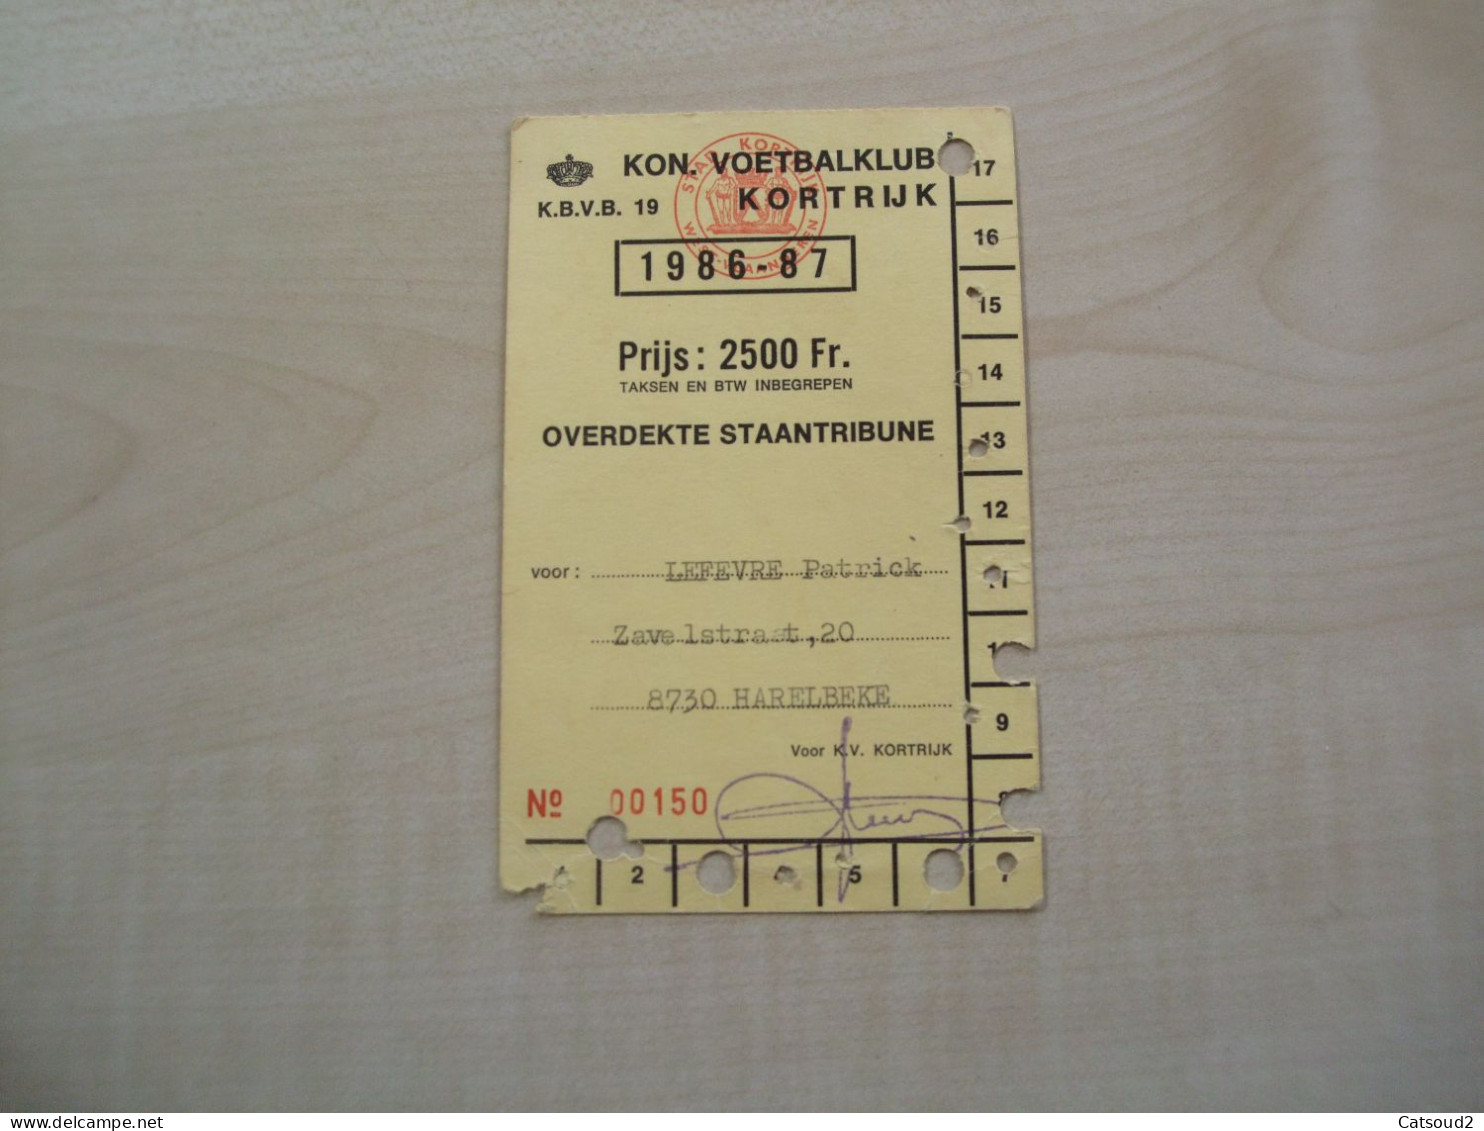 Ancien Ticket Entrée KON. VOETBALKLUB KORTRIJK 1986-87 - Tickets D'entrée